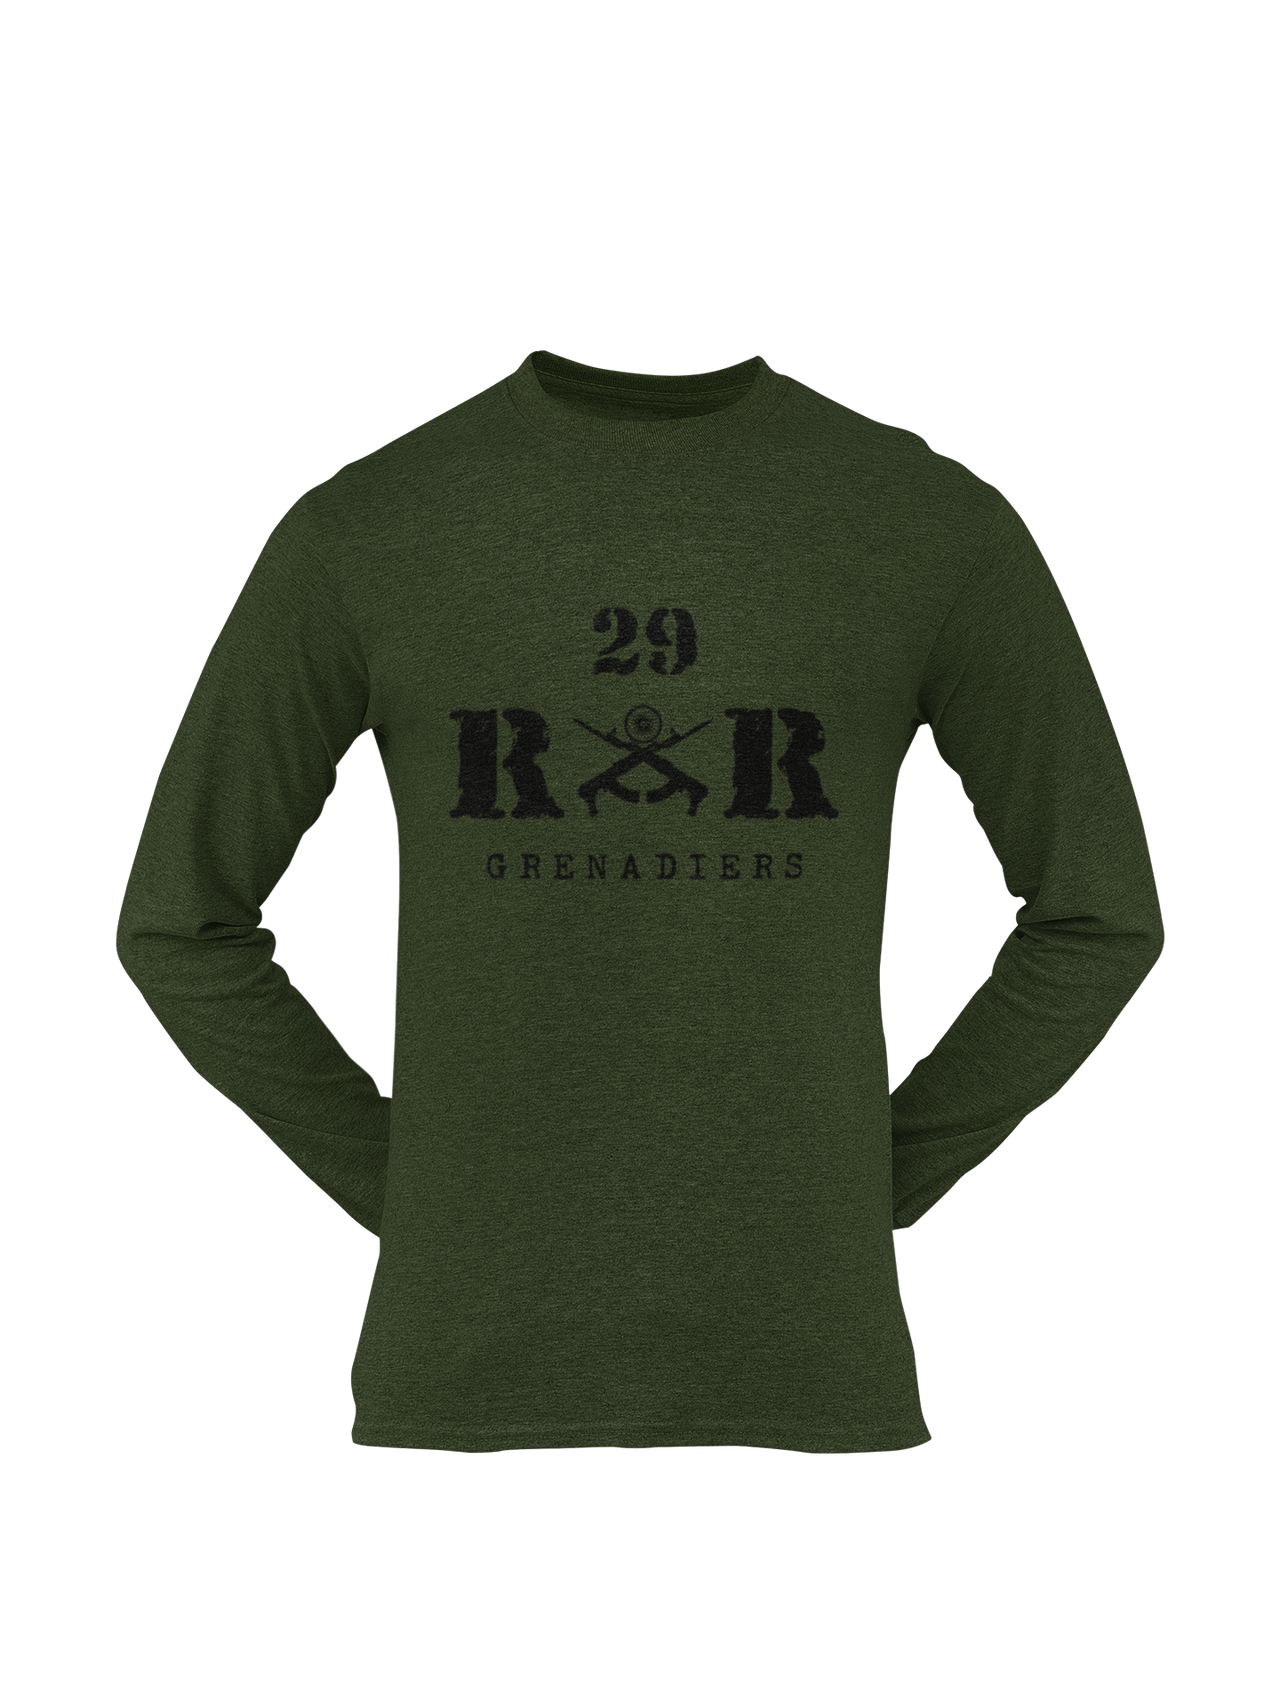 Rashtriya Rifles T-shirt - 29 RR Grenadiers (Men)